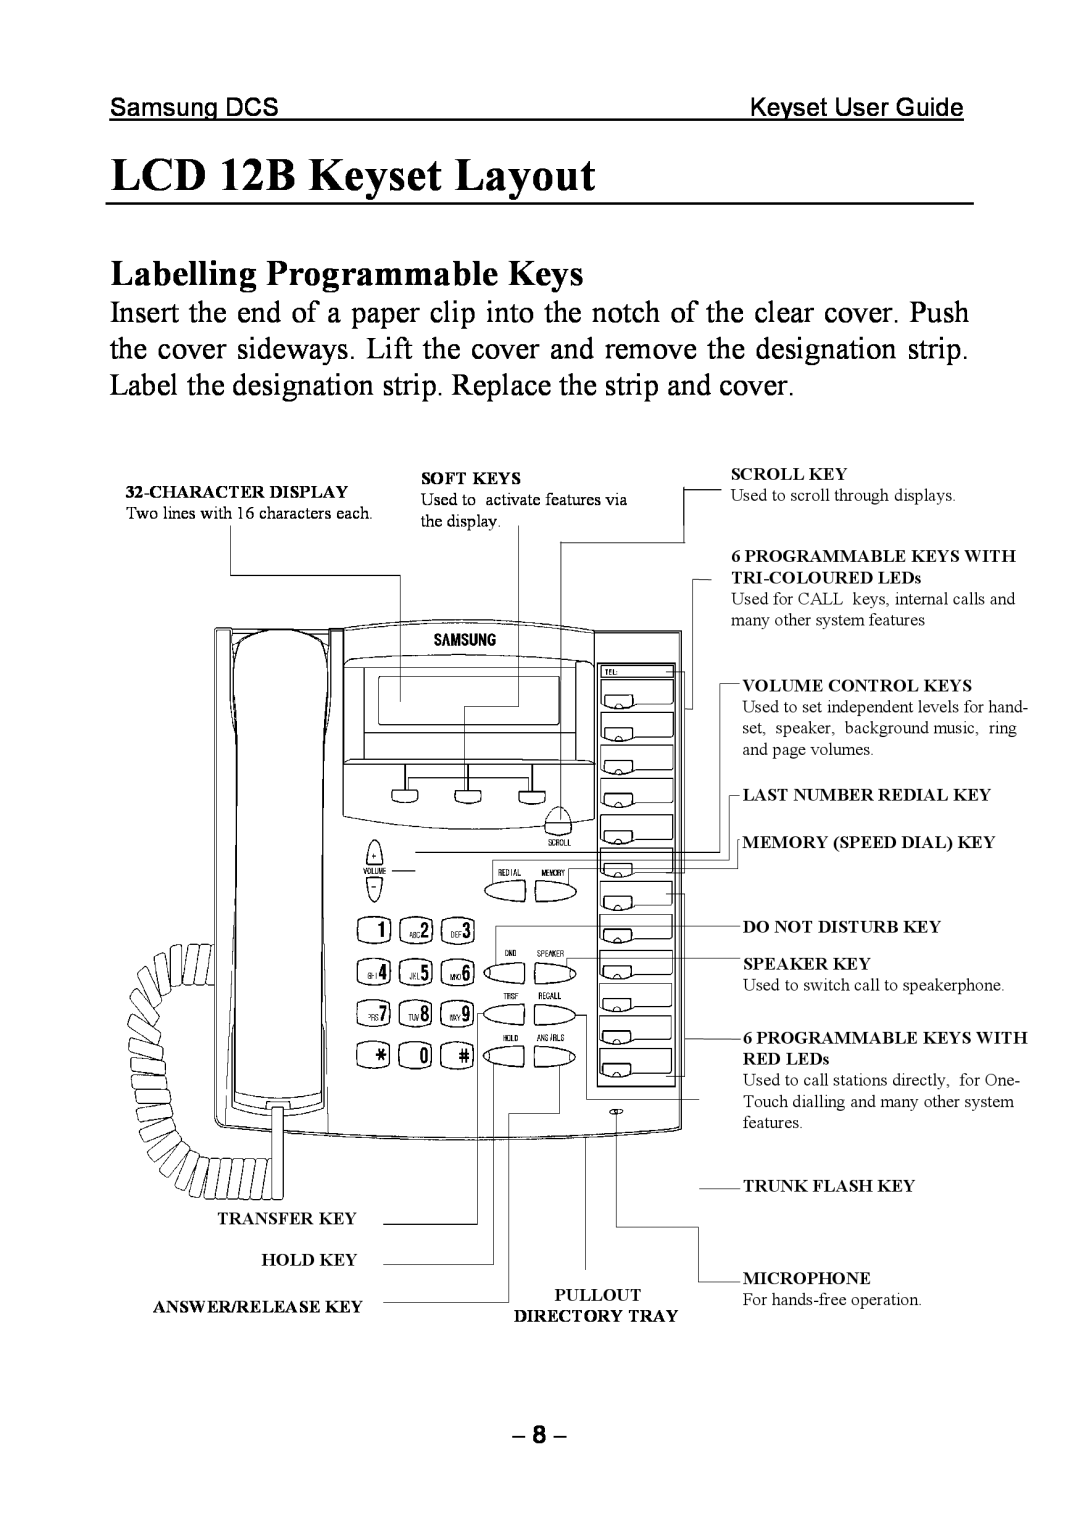 Samsung DCS KEYSET manual LCD 12B Keyset Layout, Labelling Programmable Keys 